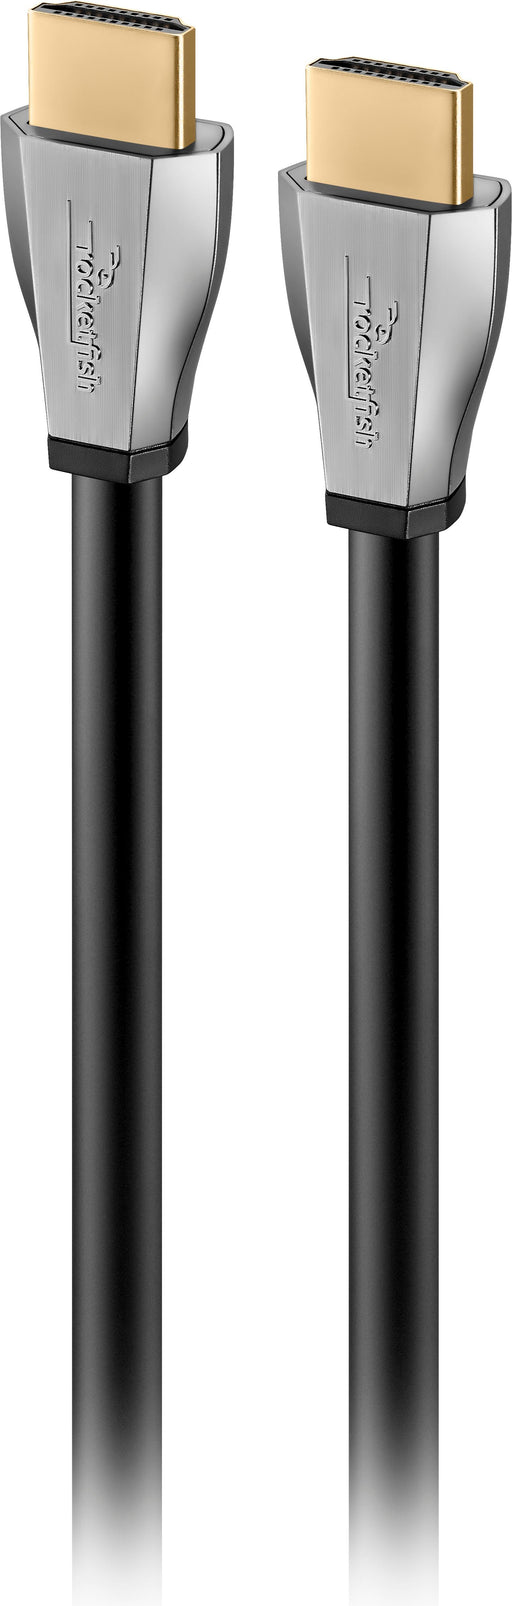 Rocketfish - 12' 4K UltraHD/HDR In-Wall Rated HDMI Cable - Black